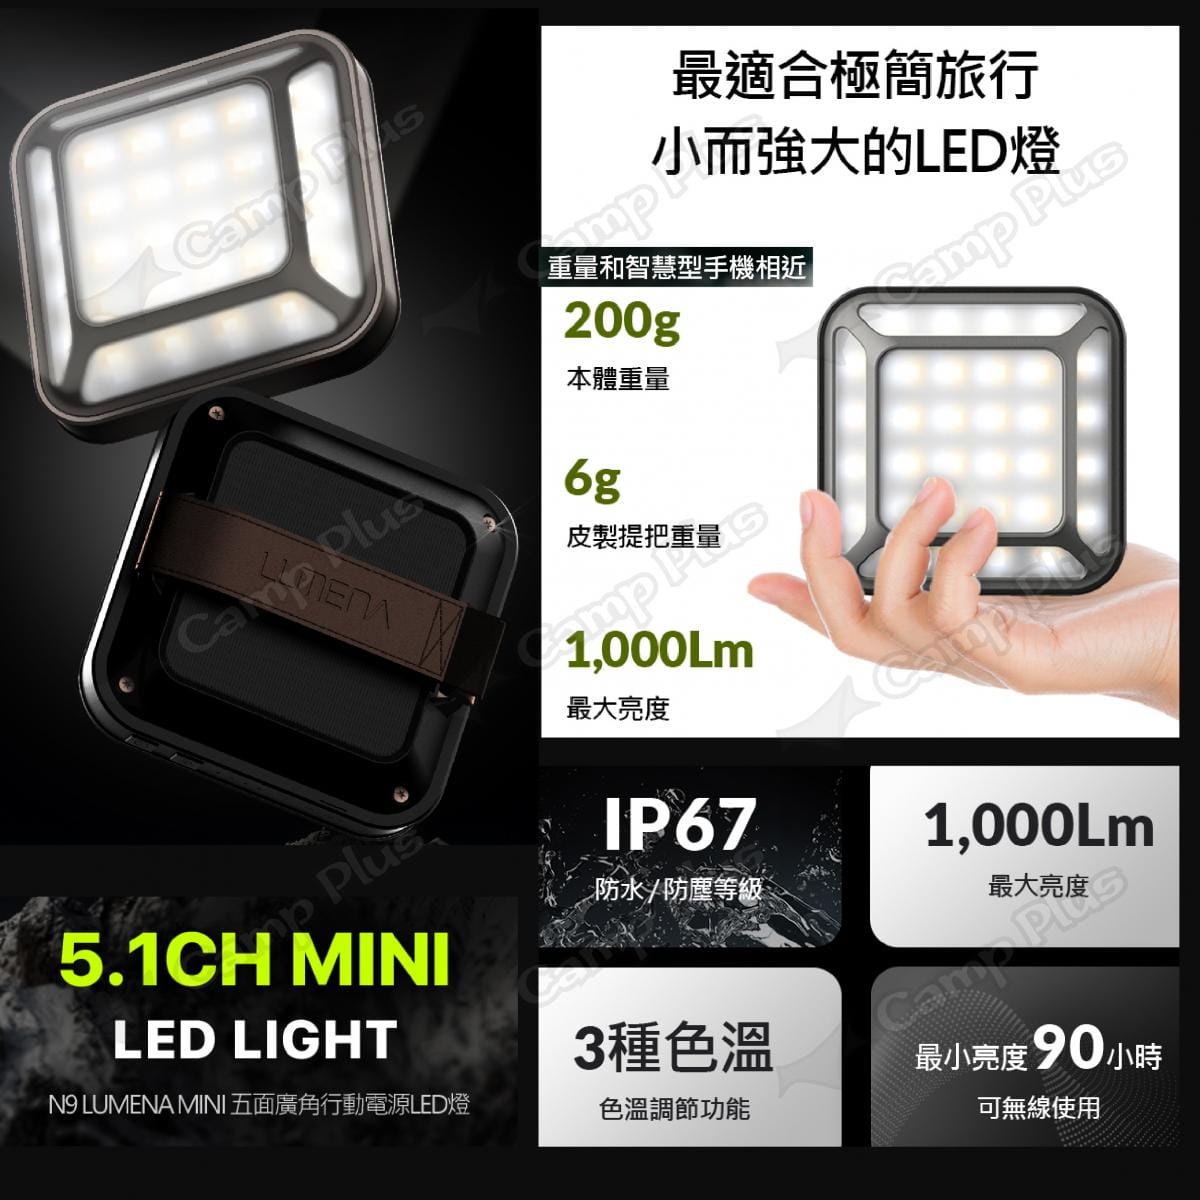 【N9 LUMENA】MINI 五面廣角行動電源LED燈 (悠遊戶外) 2